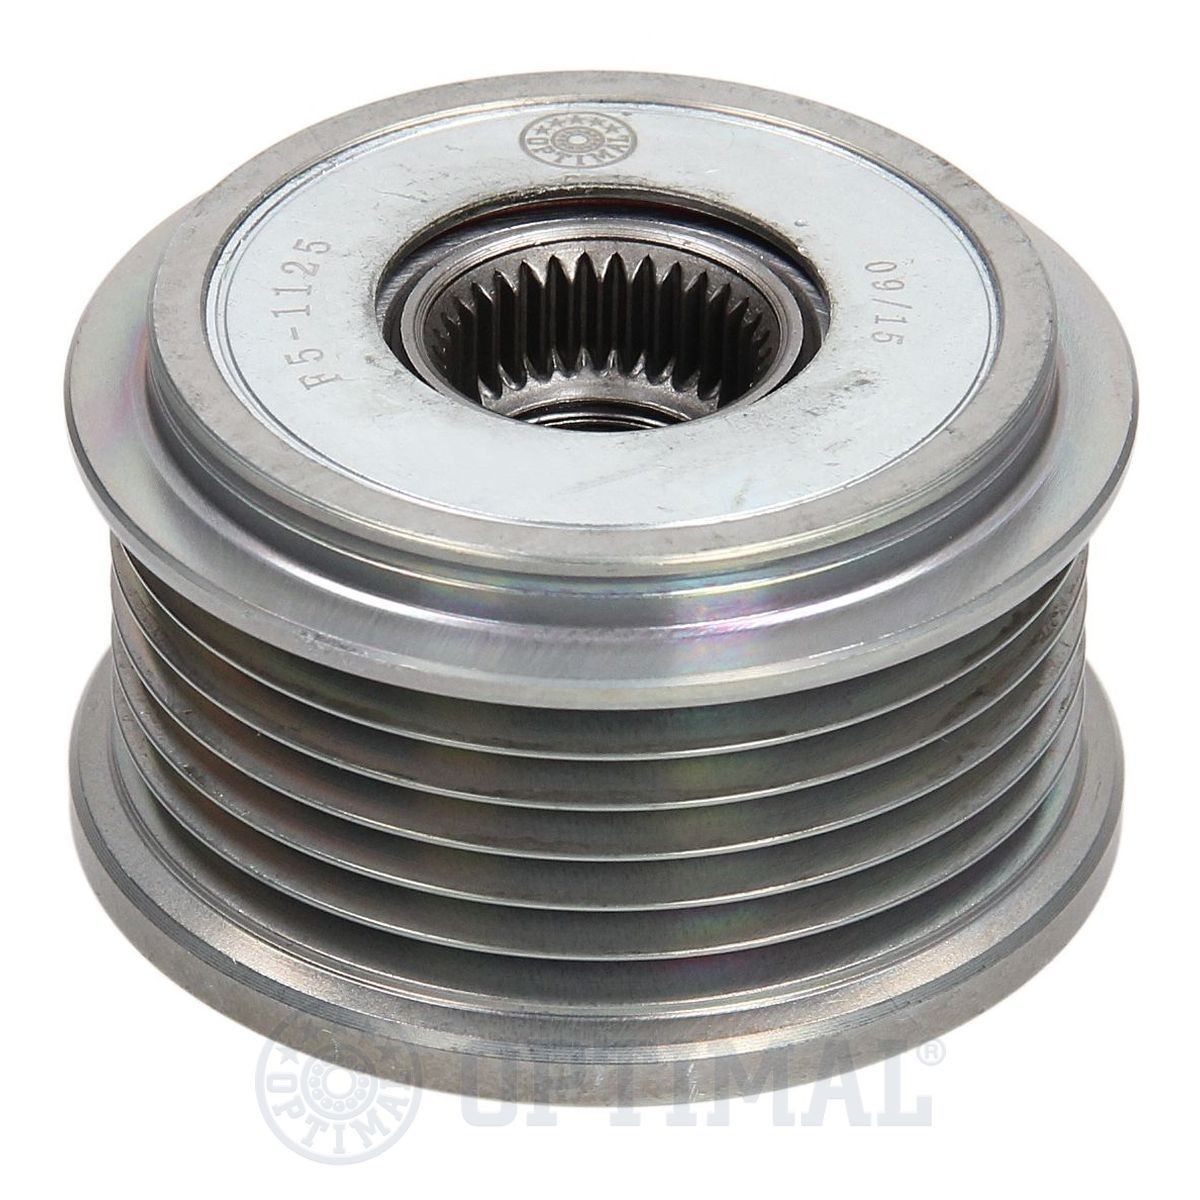 Alternator freewheel pulley OPTIMAL - F5-1125